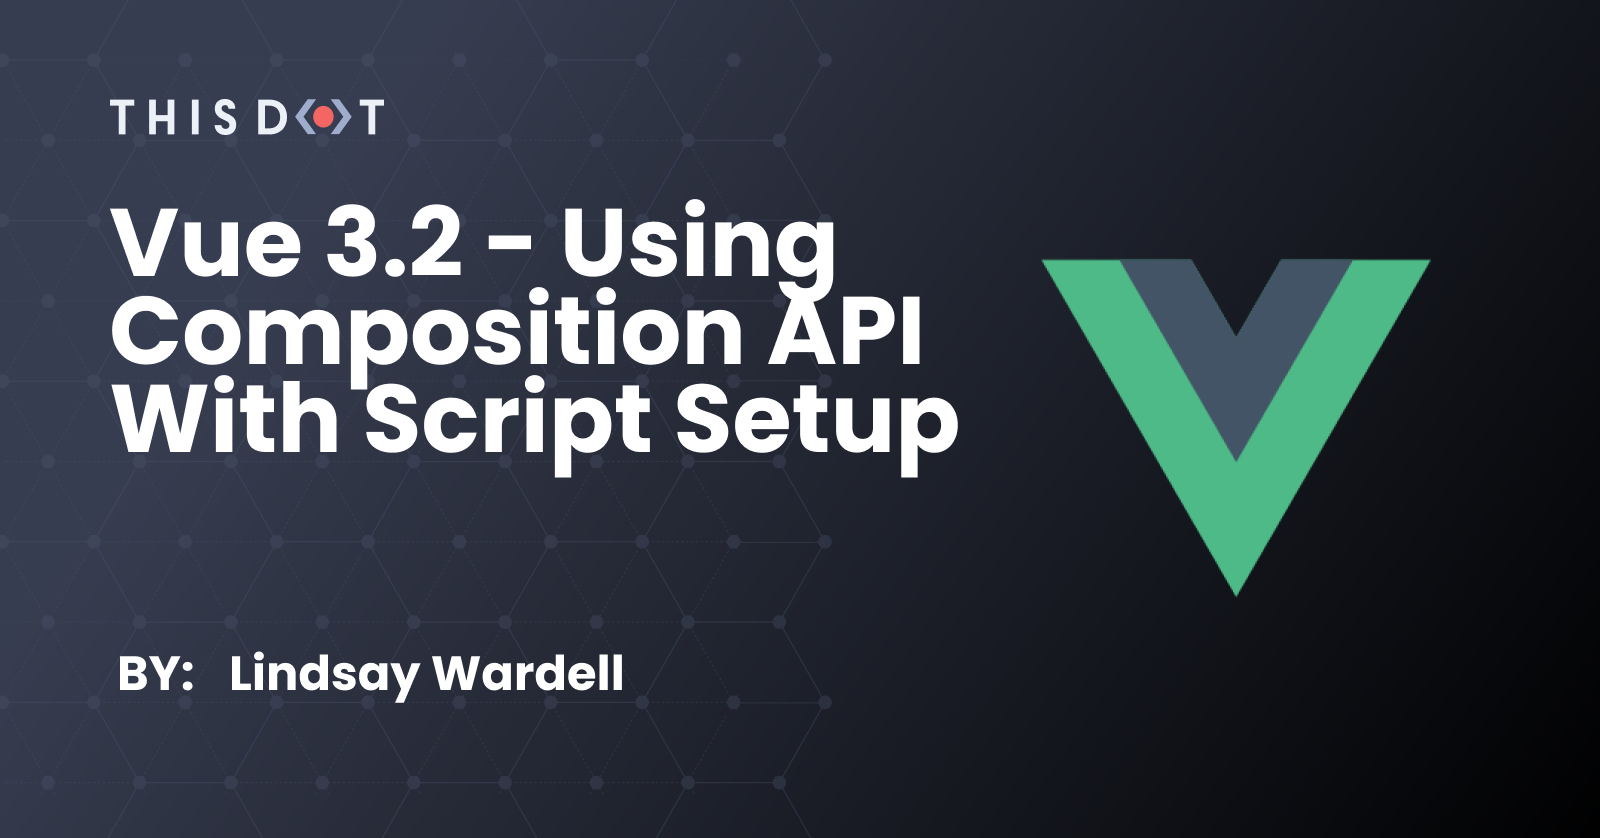 Vue 3.2 - Using Composition API with Script Setup